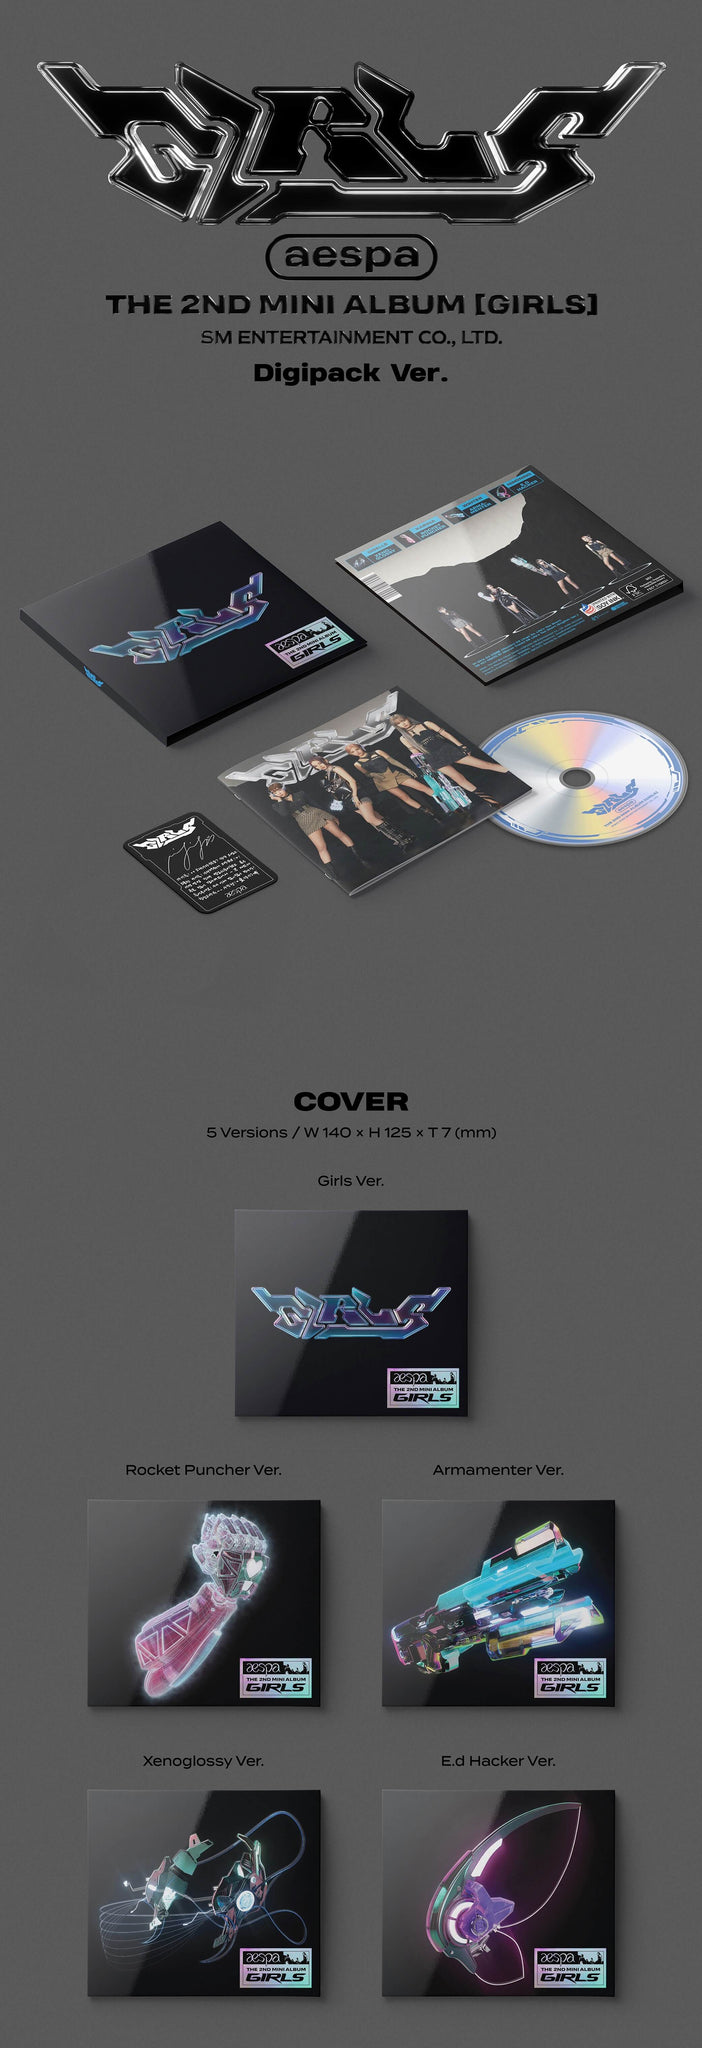 aespa 2nd Mini Album Girls Digipack Version Inclusions Cover